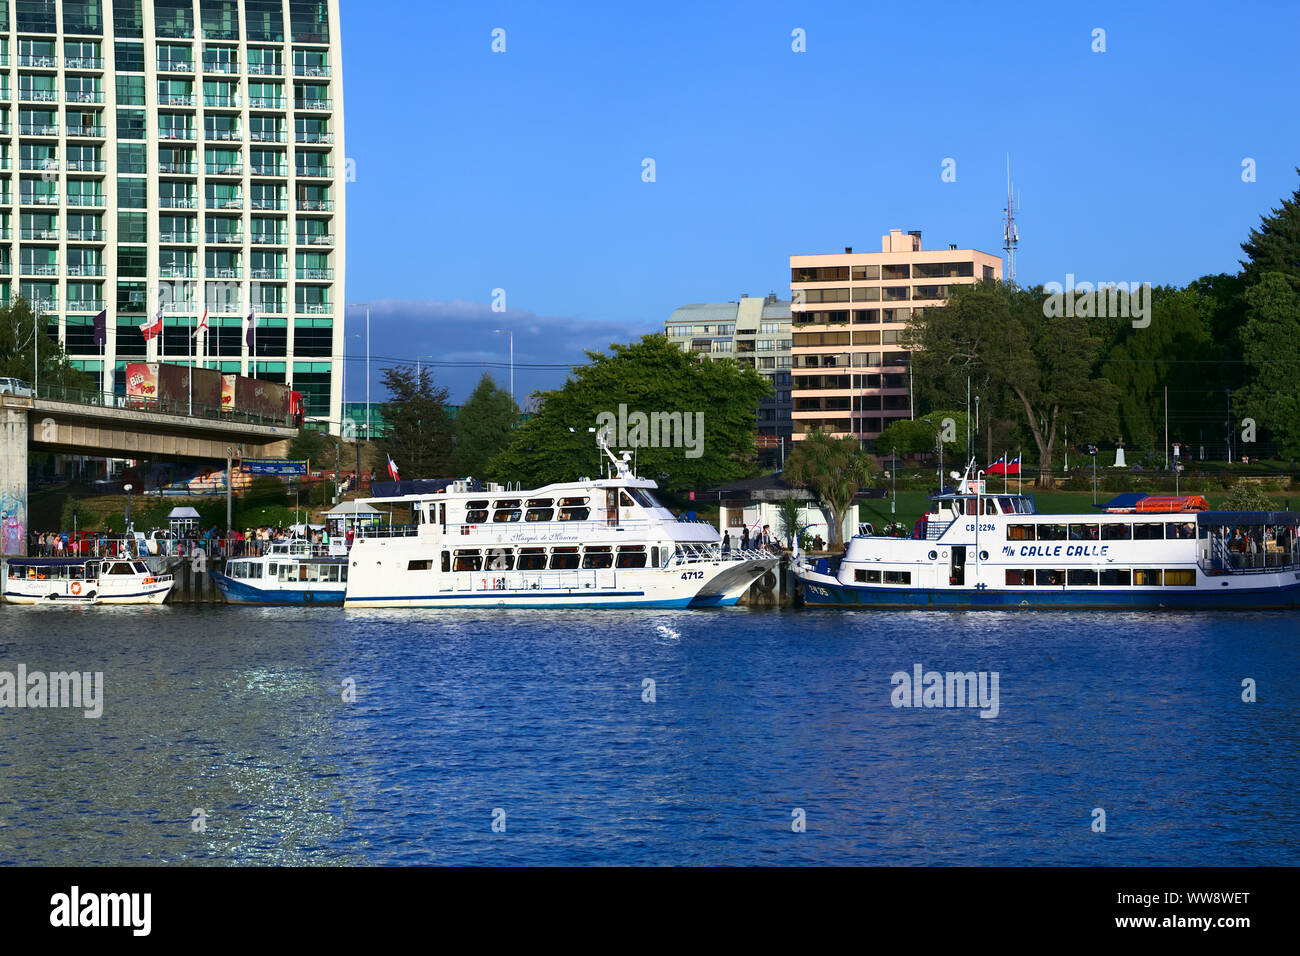 VALDIVIA, CHILE - Februar 3, 2016: Sightseeing Tour Boote am 3. Februar 2016 in Valdivia, Chile. Valdivia ist ein beliebtes Reiseziel in Chile. Stockfoto